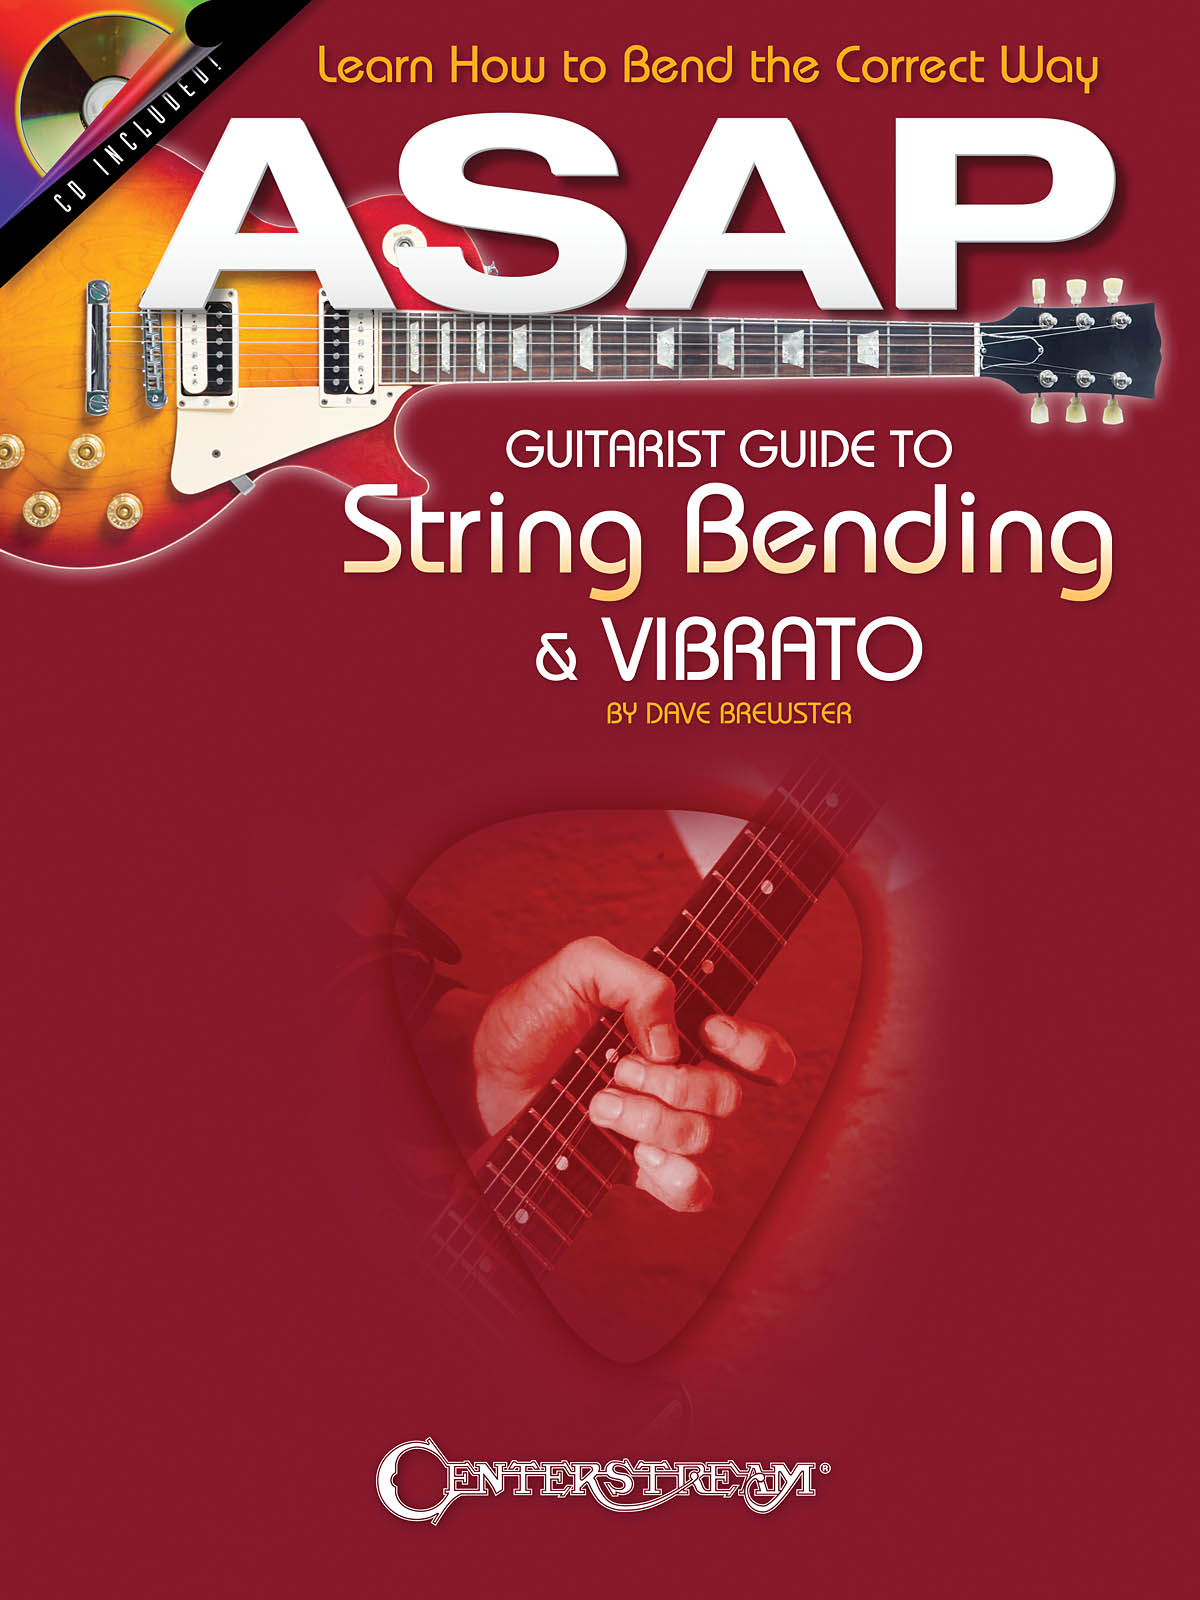 Asap - Guitarist Guide To Tring Bending & Vibrato